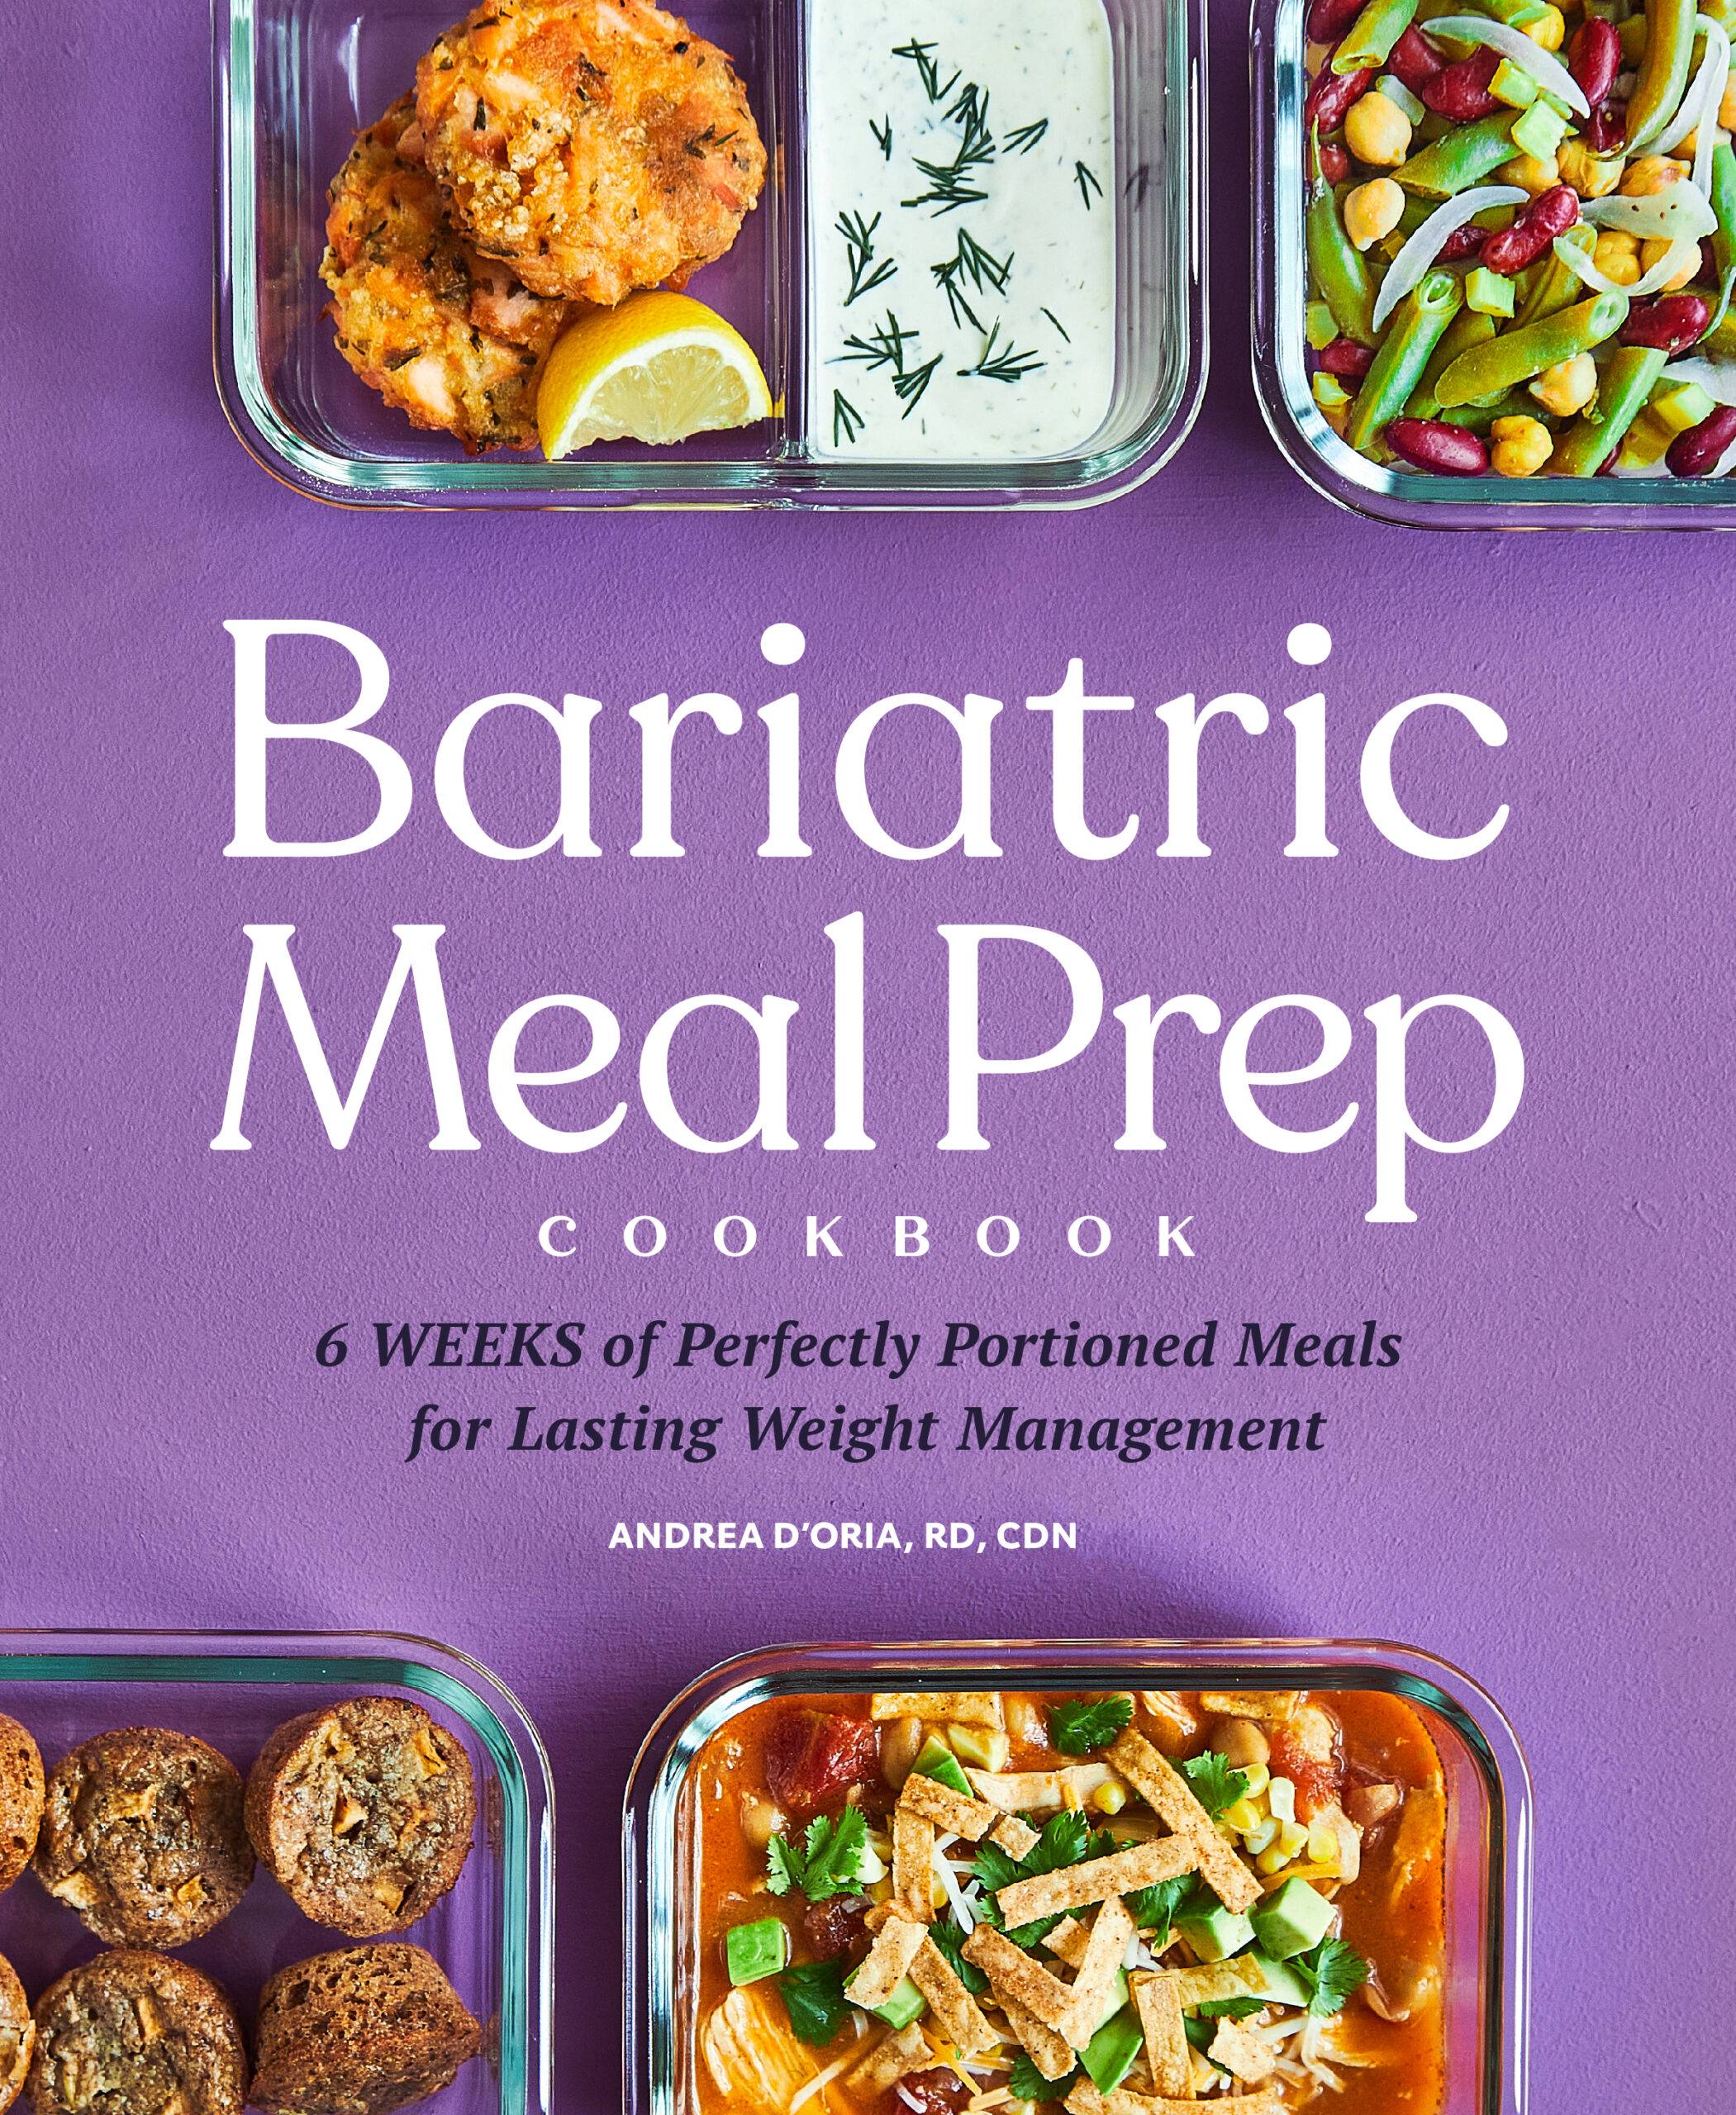 Bariatric Meal Prep Cook Book, Andrea D'Oria, Bariatric Meal, Bariatric Meal Prep, Andrea D'Oria Meal Prep, Andrea D'Oria Cookbook